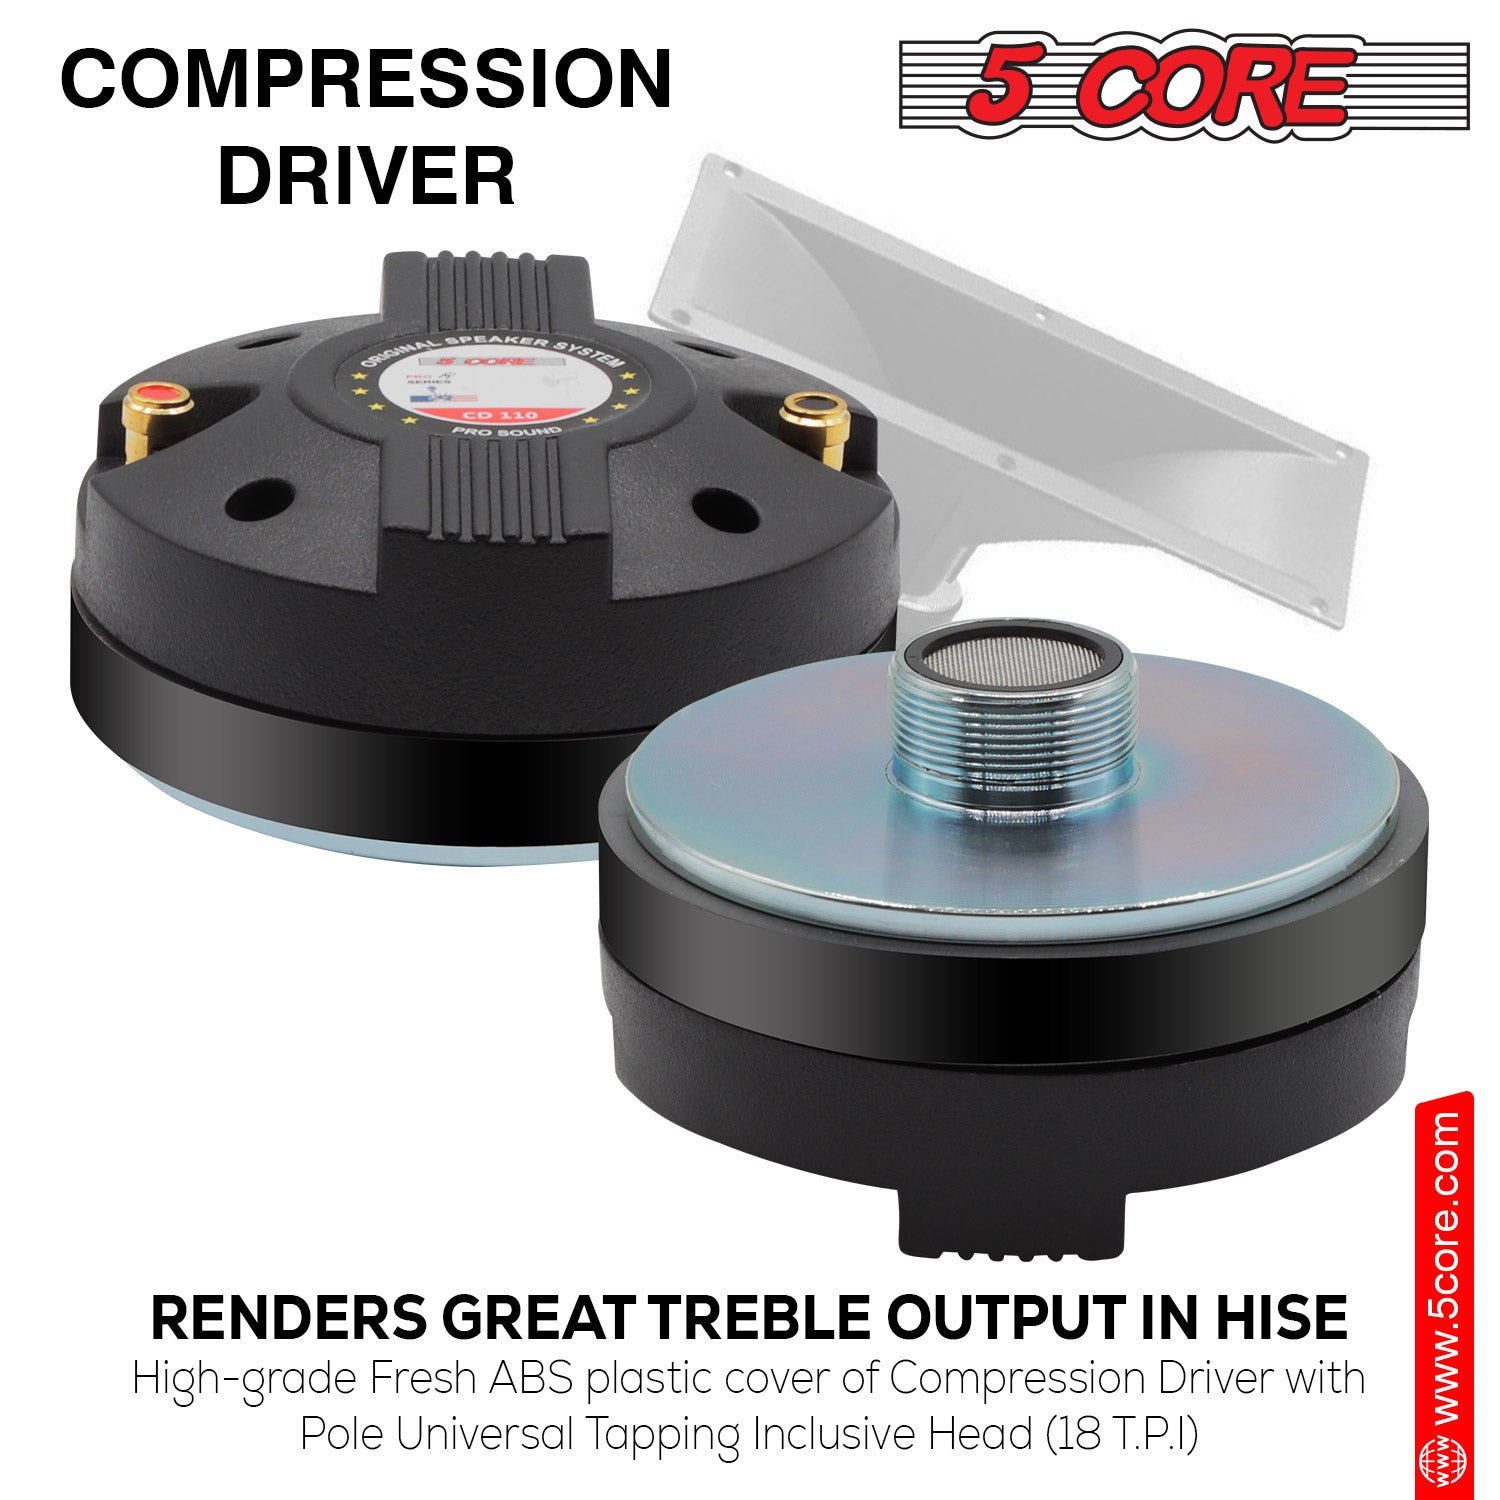 5 Core Compression Driver • 1100W PMPO • Titanium Tweeter Diaphragm 8 Ohm Throat Twist Horn Speaker